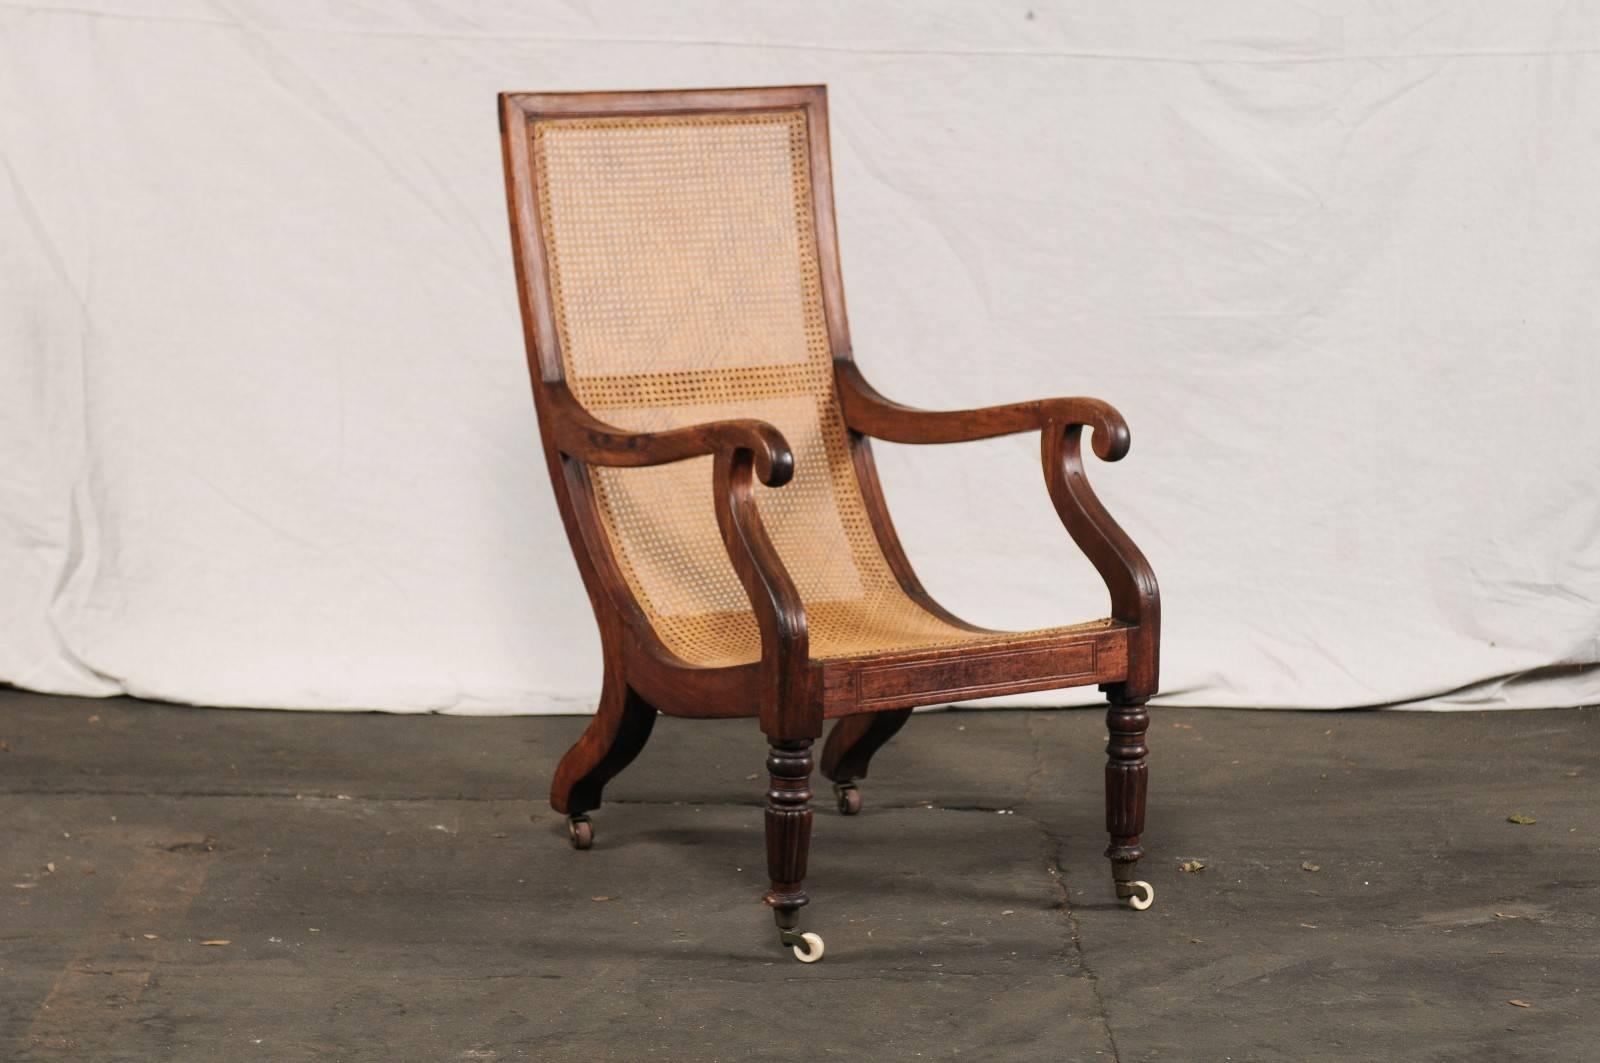 Caribbean Regency cane chair, hardware by Larrivee, circa 1820.